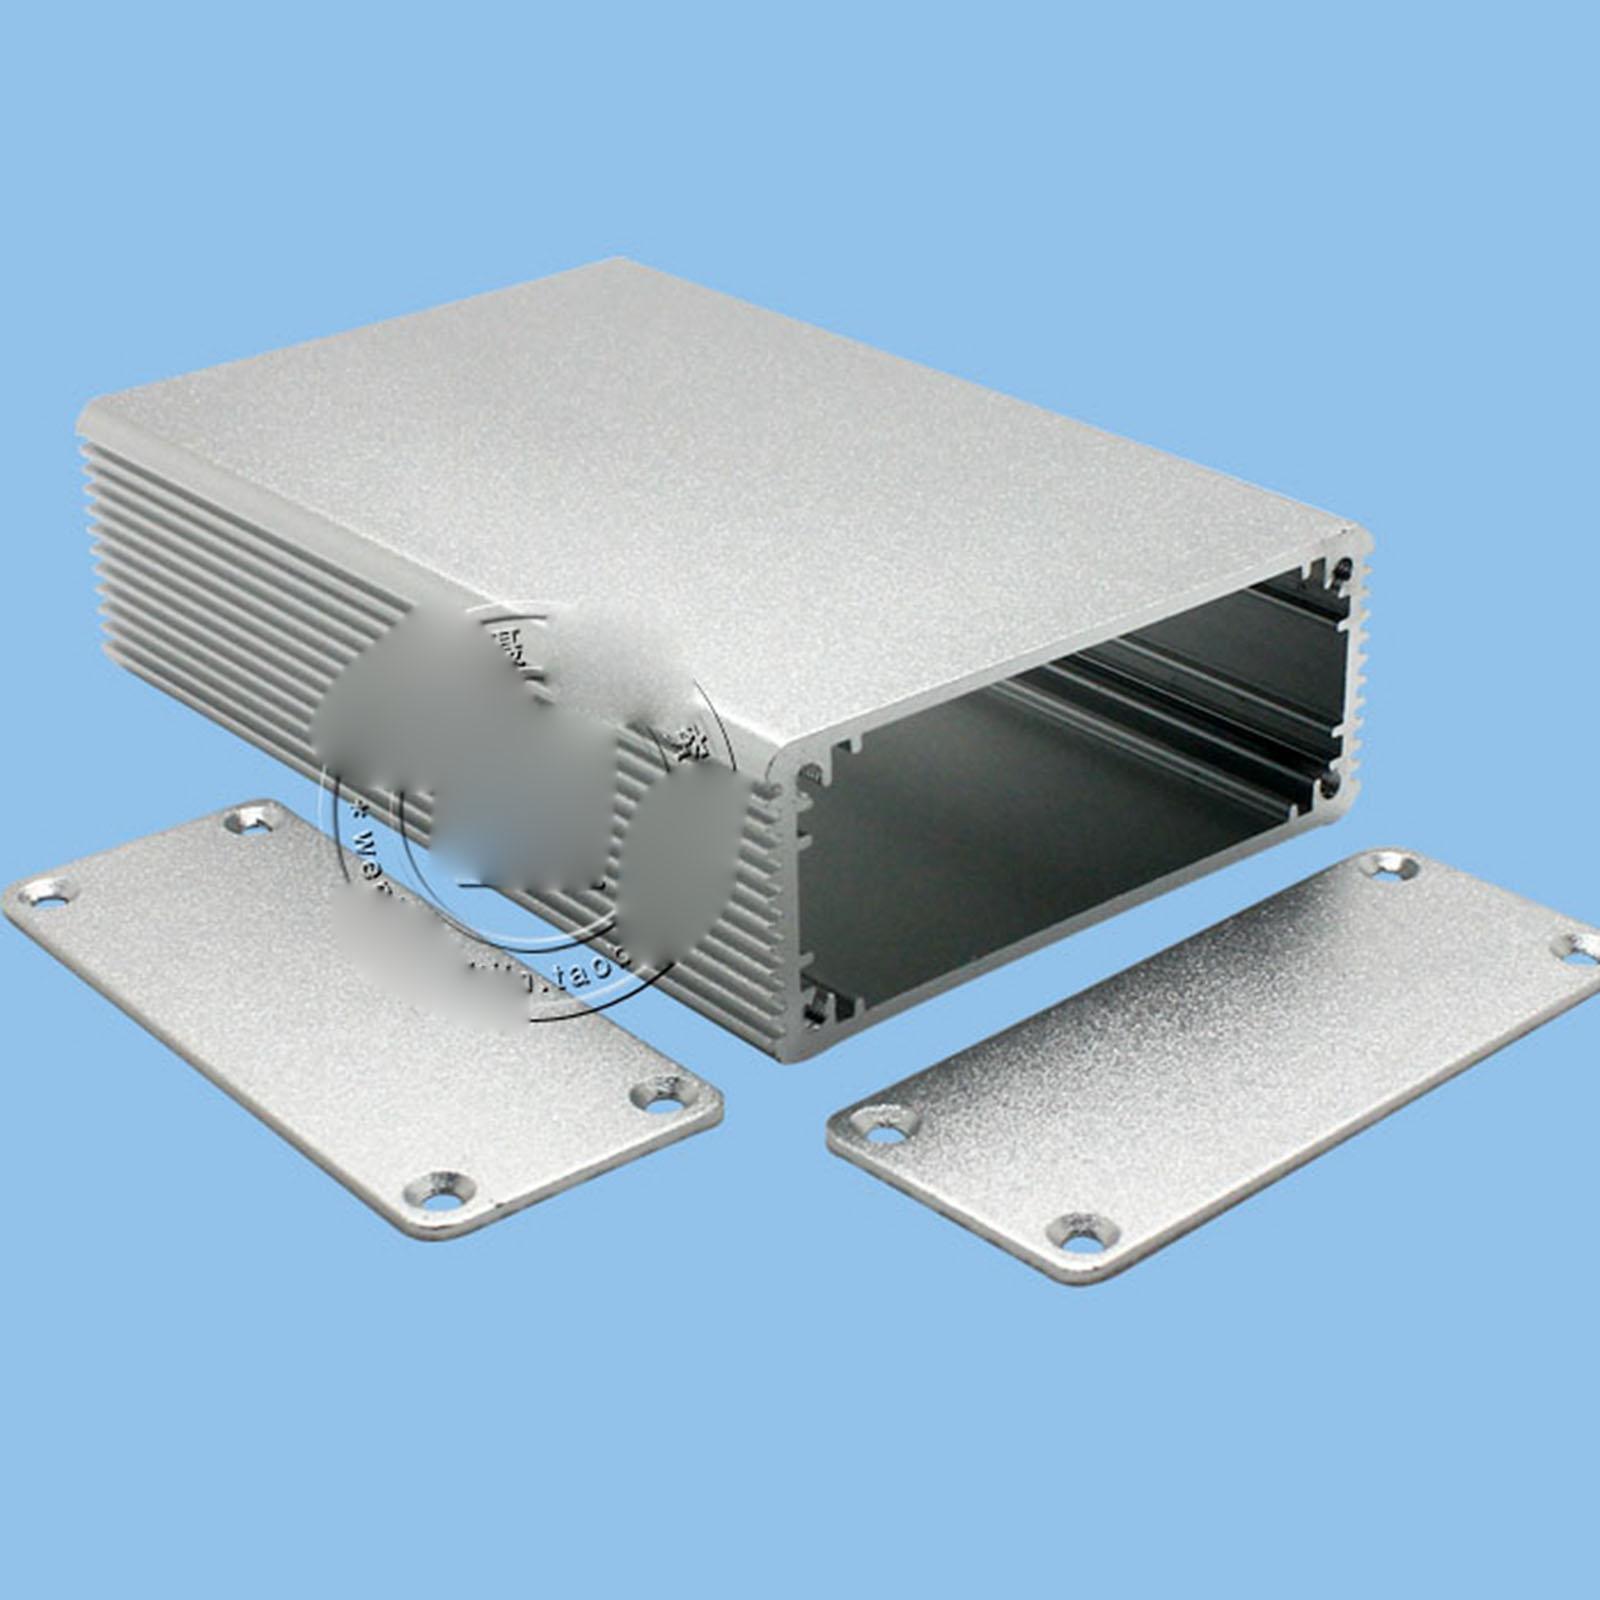 100X66X27 Mm Zilverkleurige Aluminium Behuizing Pcb Shell Cooling Box Case Diy Instrument